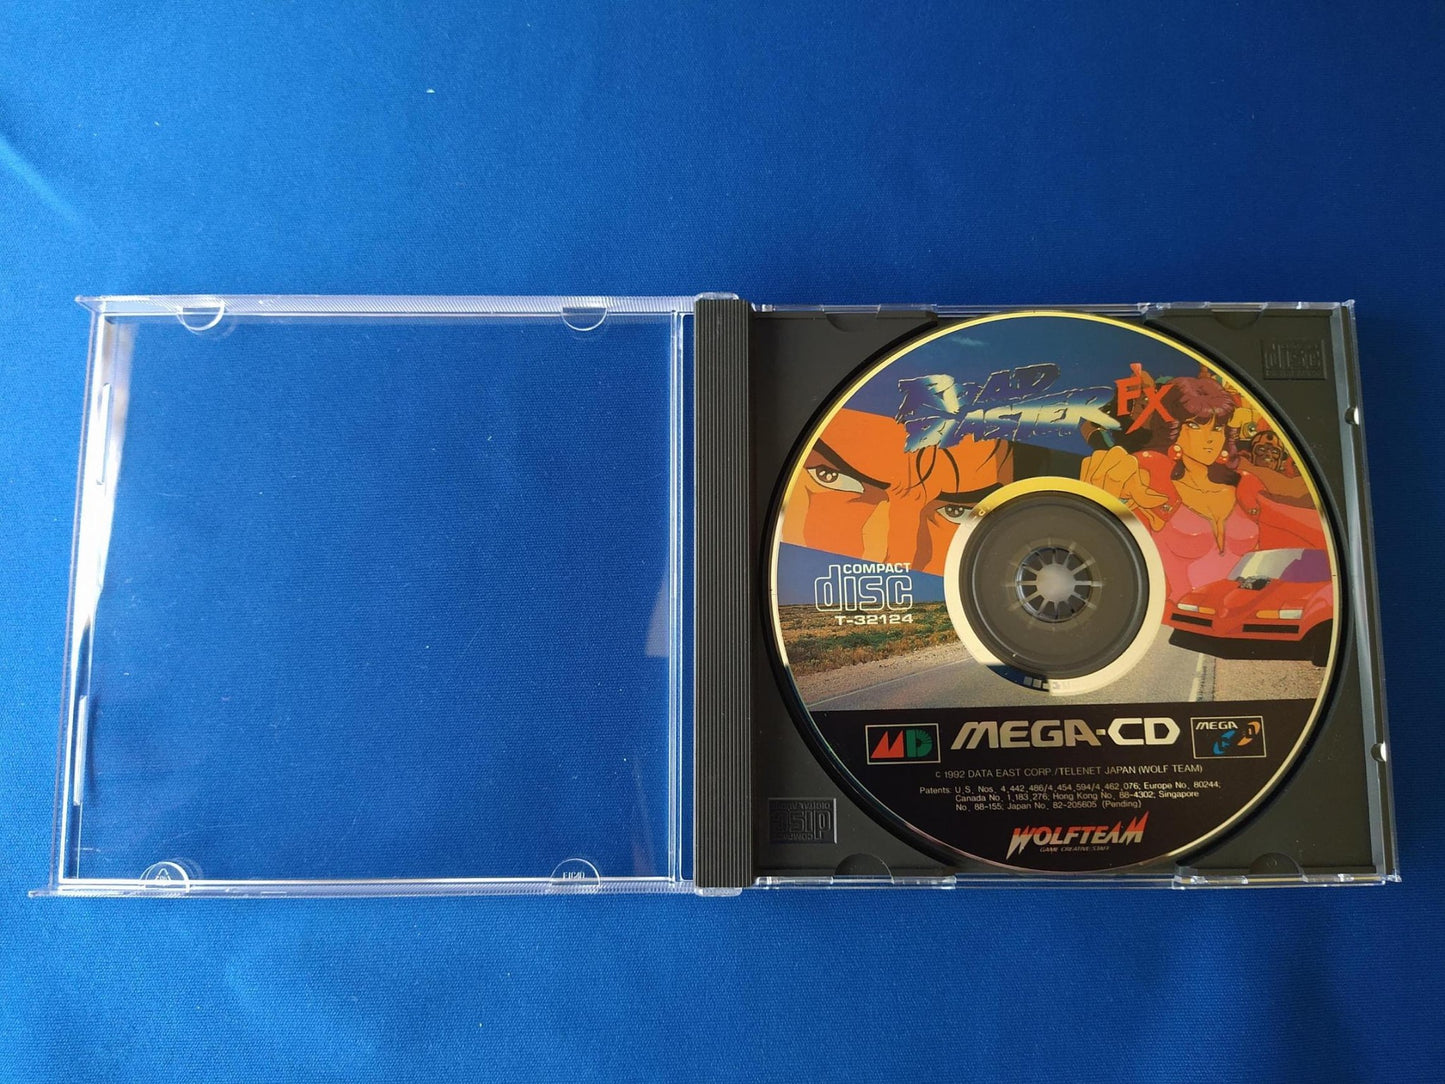 ROAD BLASTER FX MEGA CD shooter game Disk, Manual, Box set, Working -f0524-